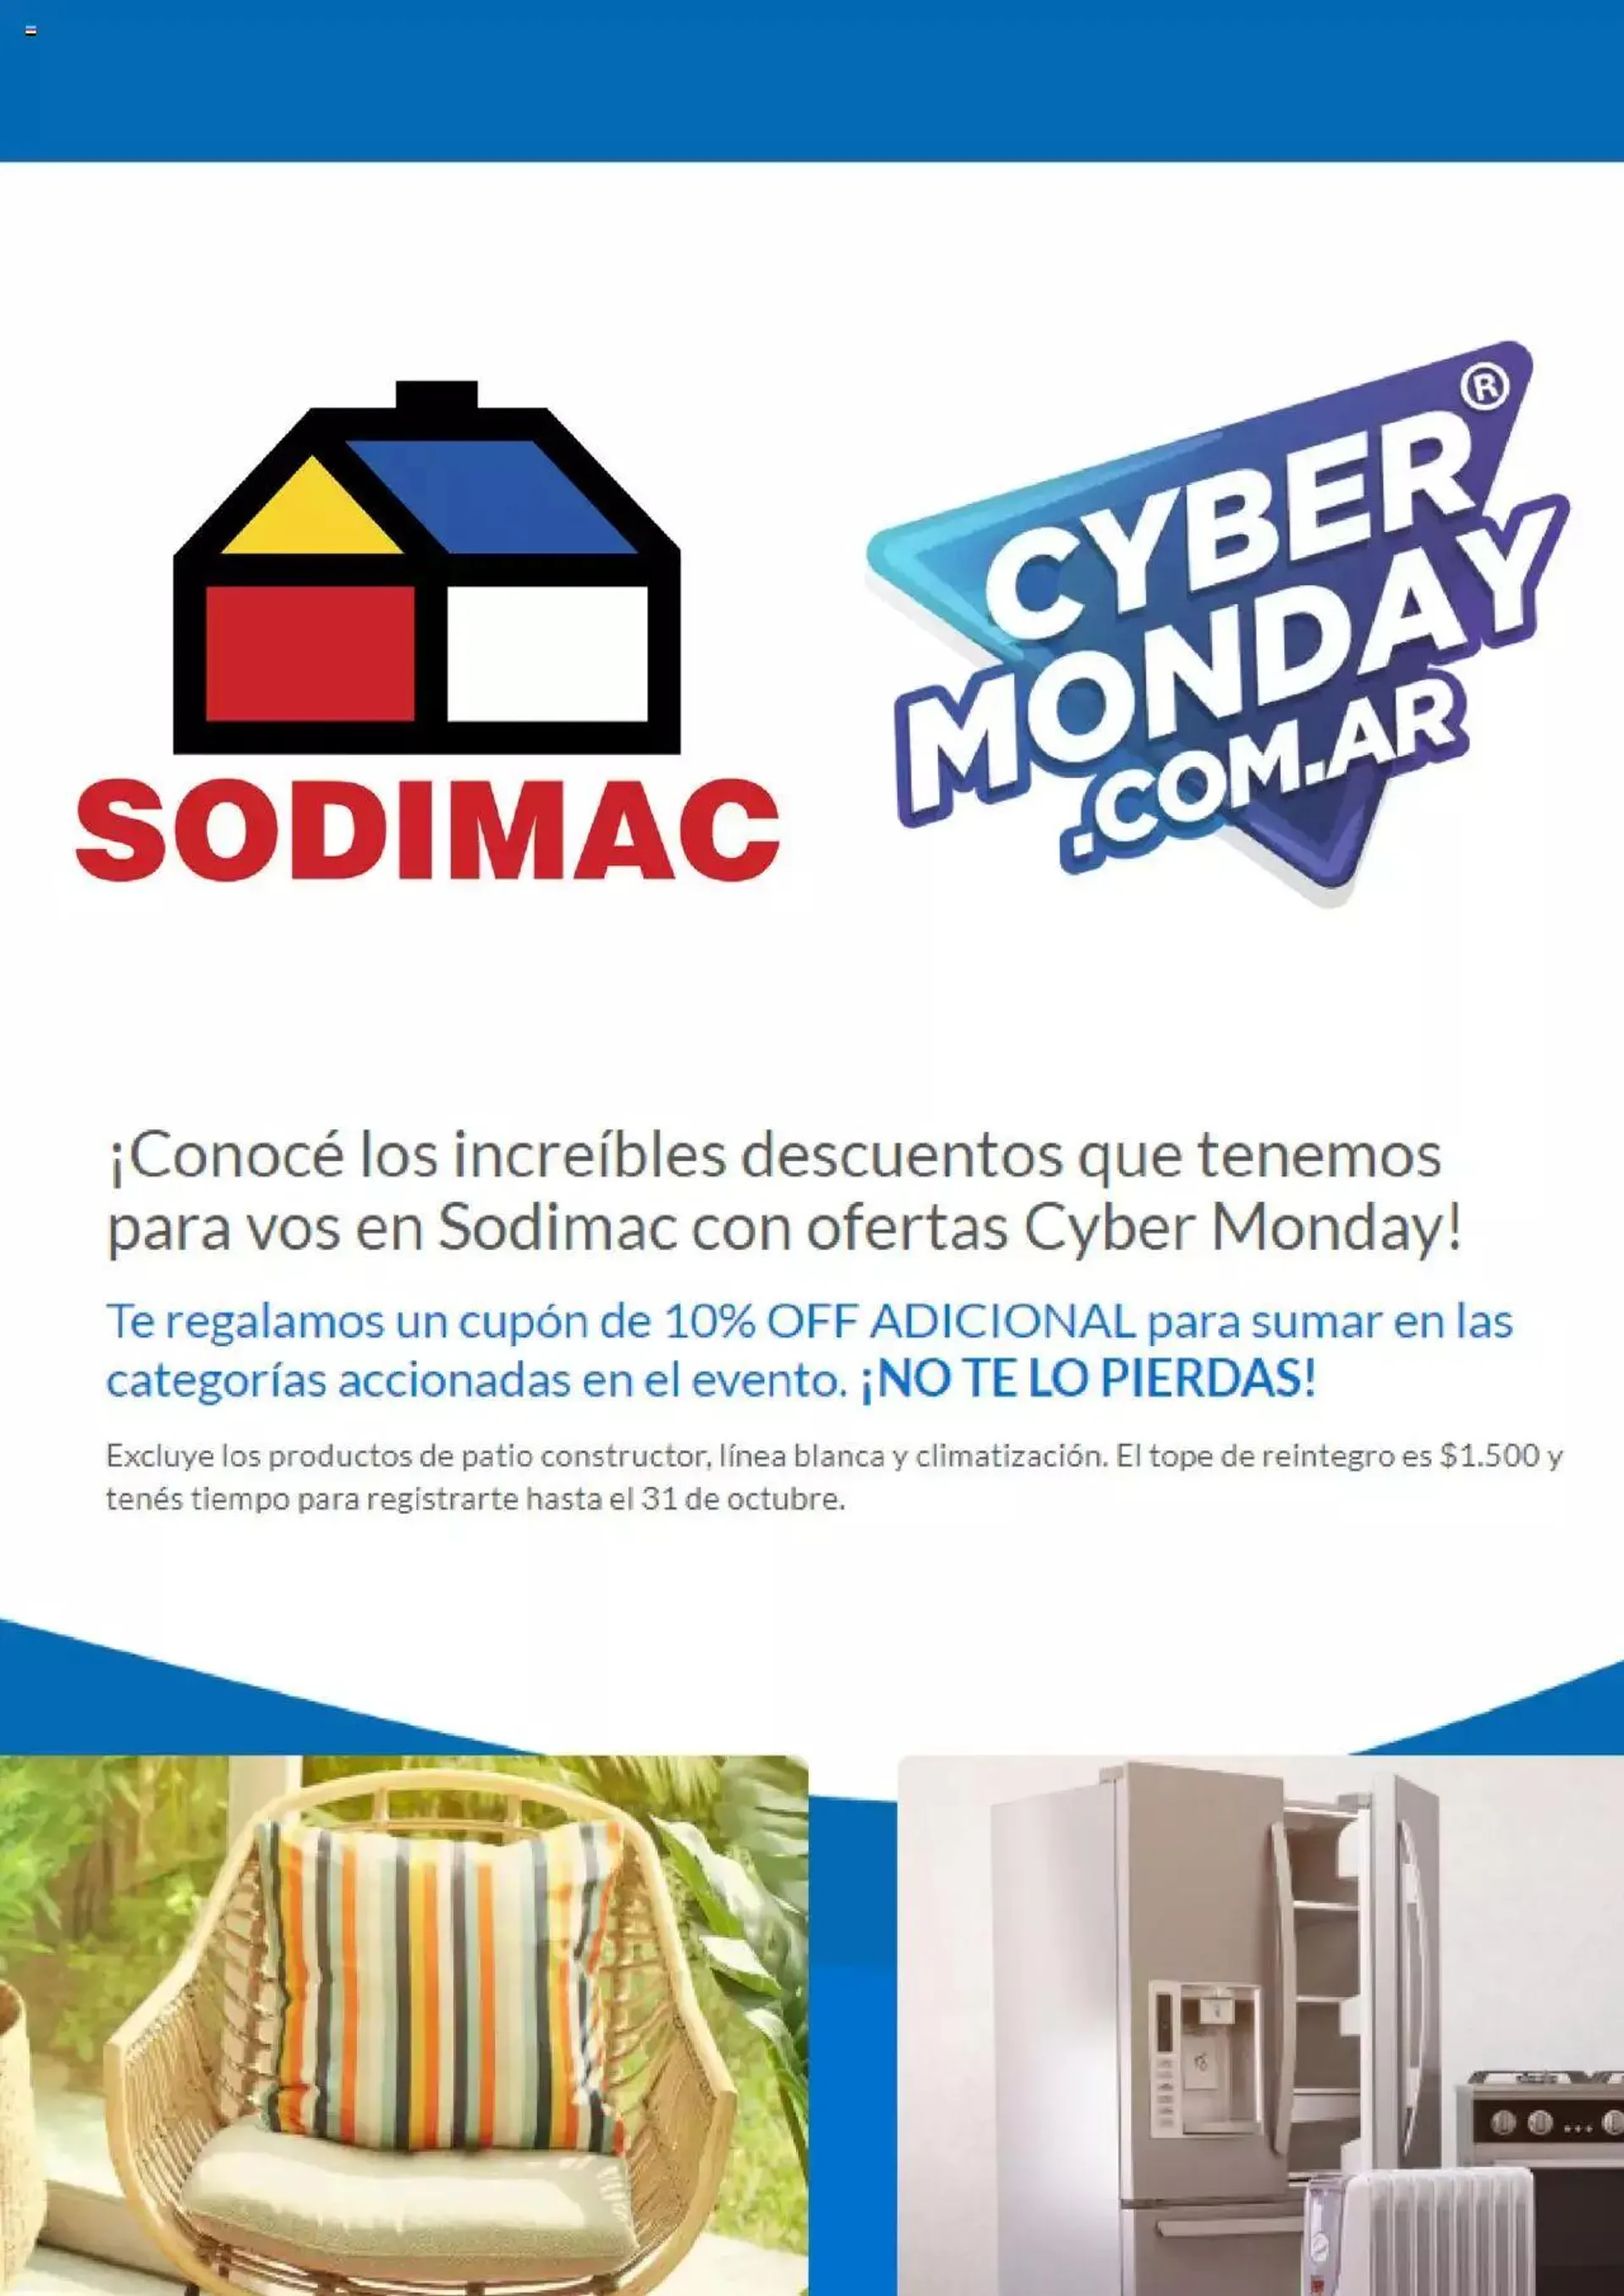 Sodimac - Cyber Monday Información - 0